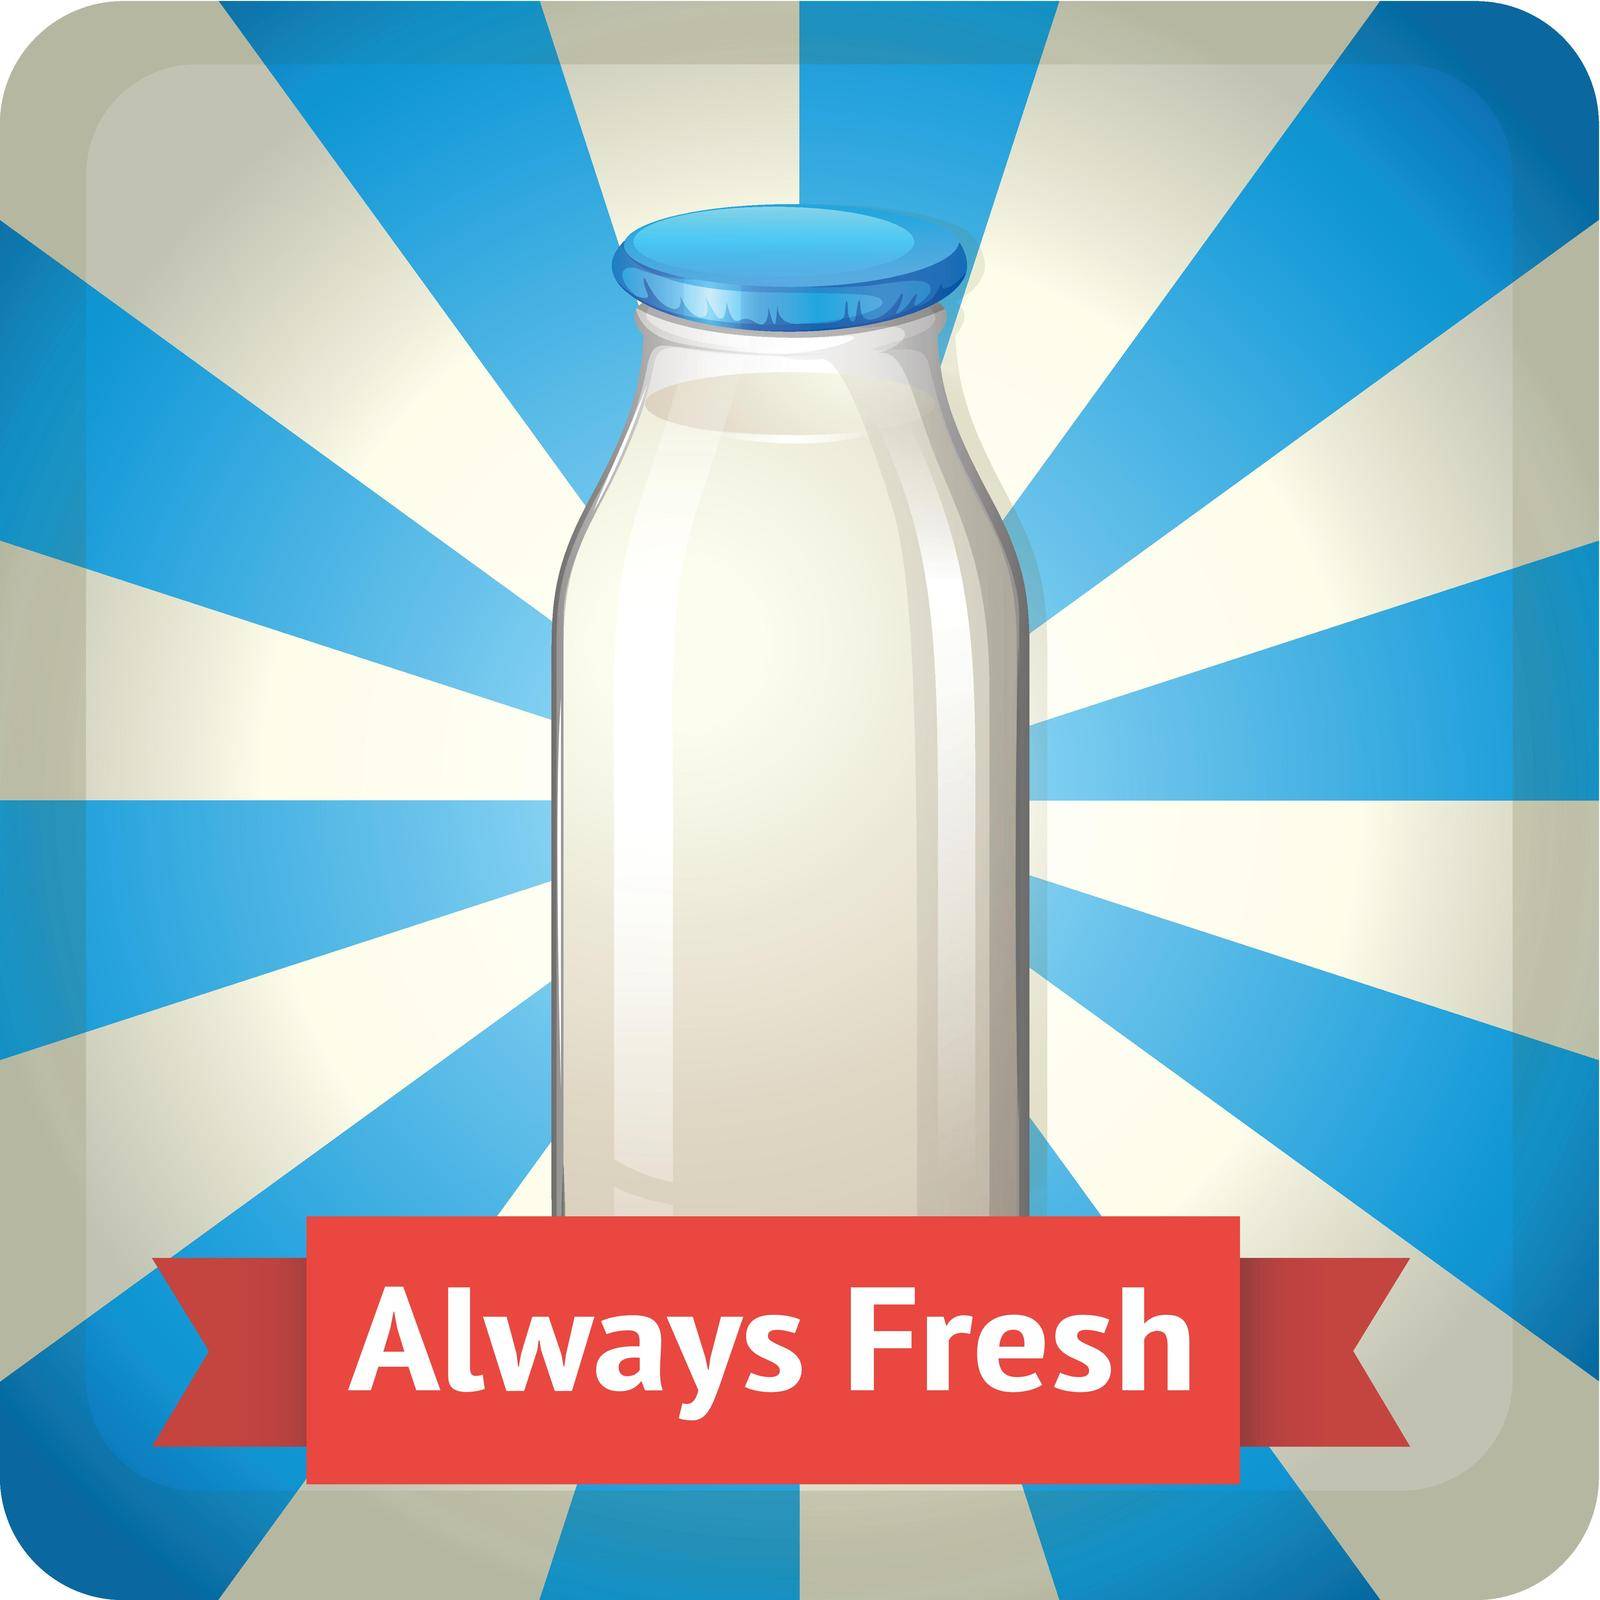 Fresh milk in the glass bottle